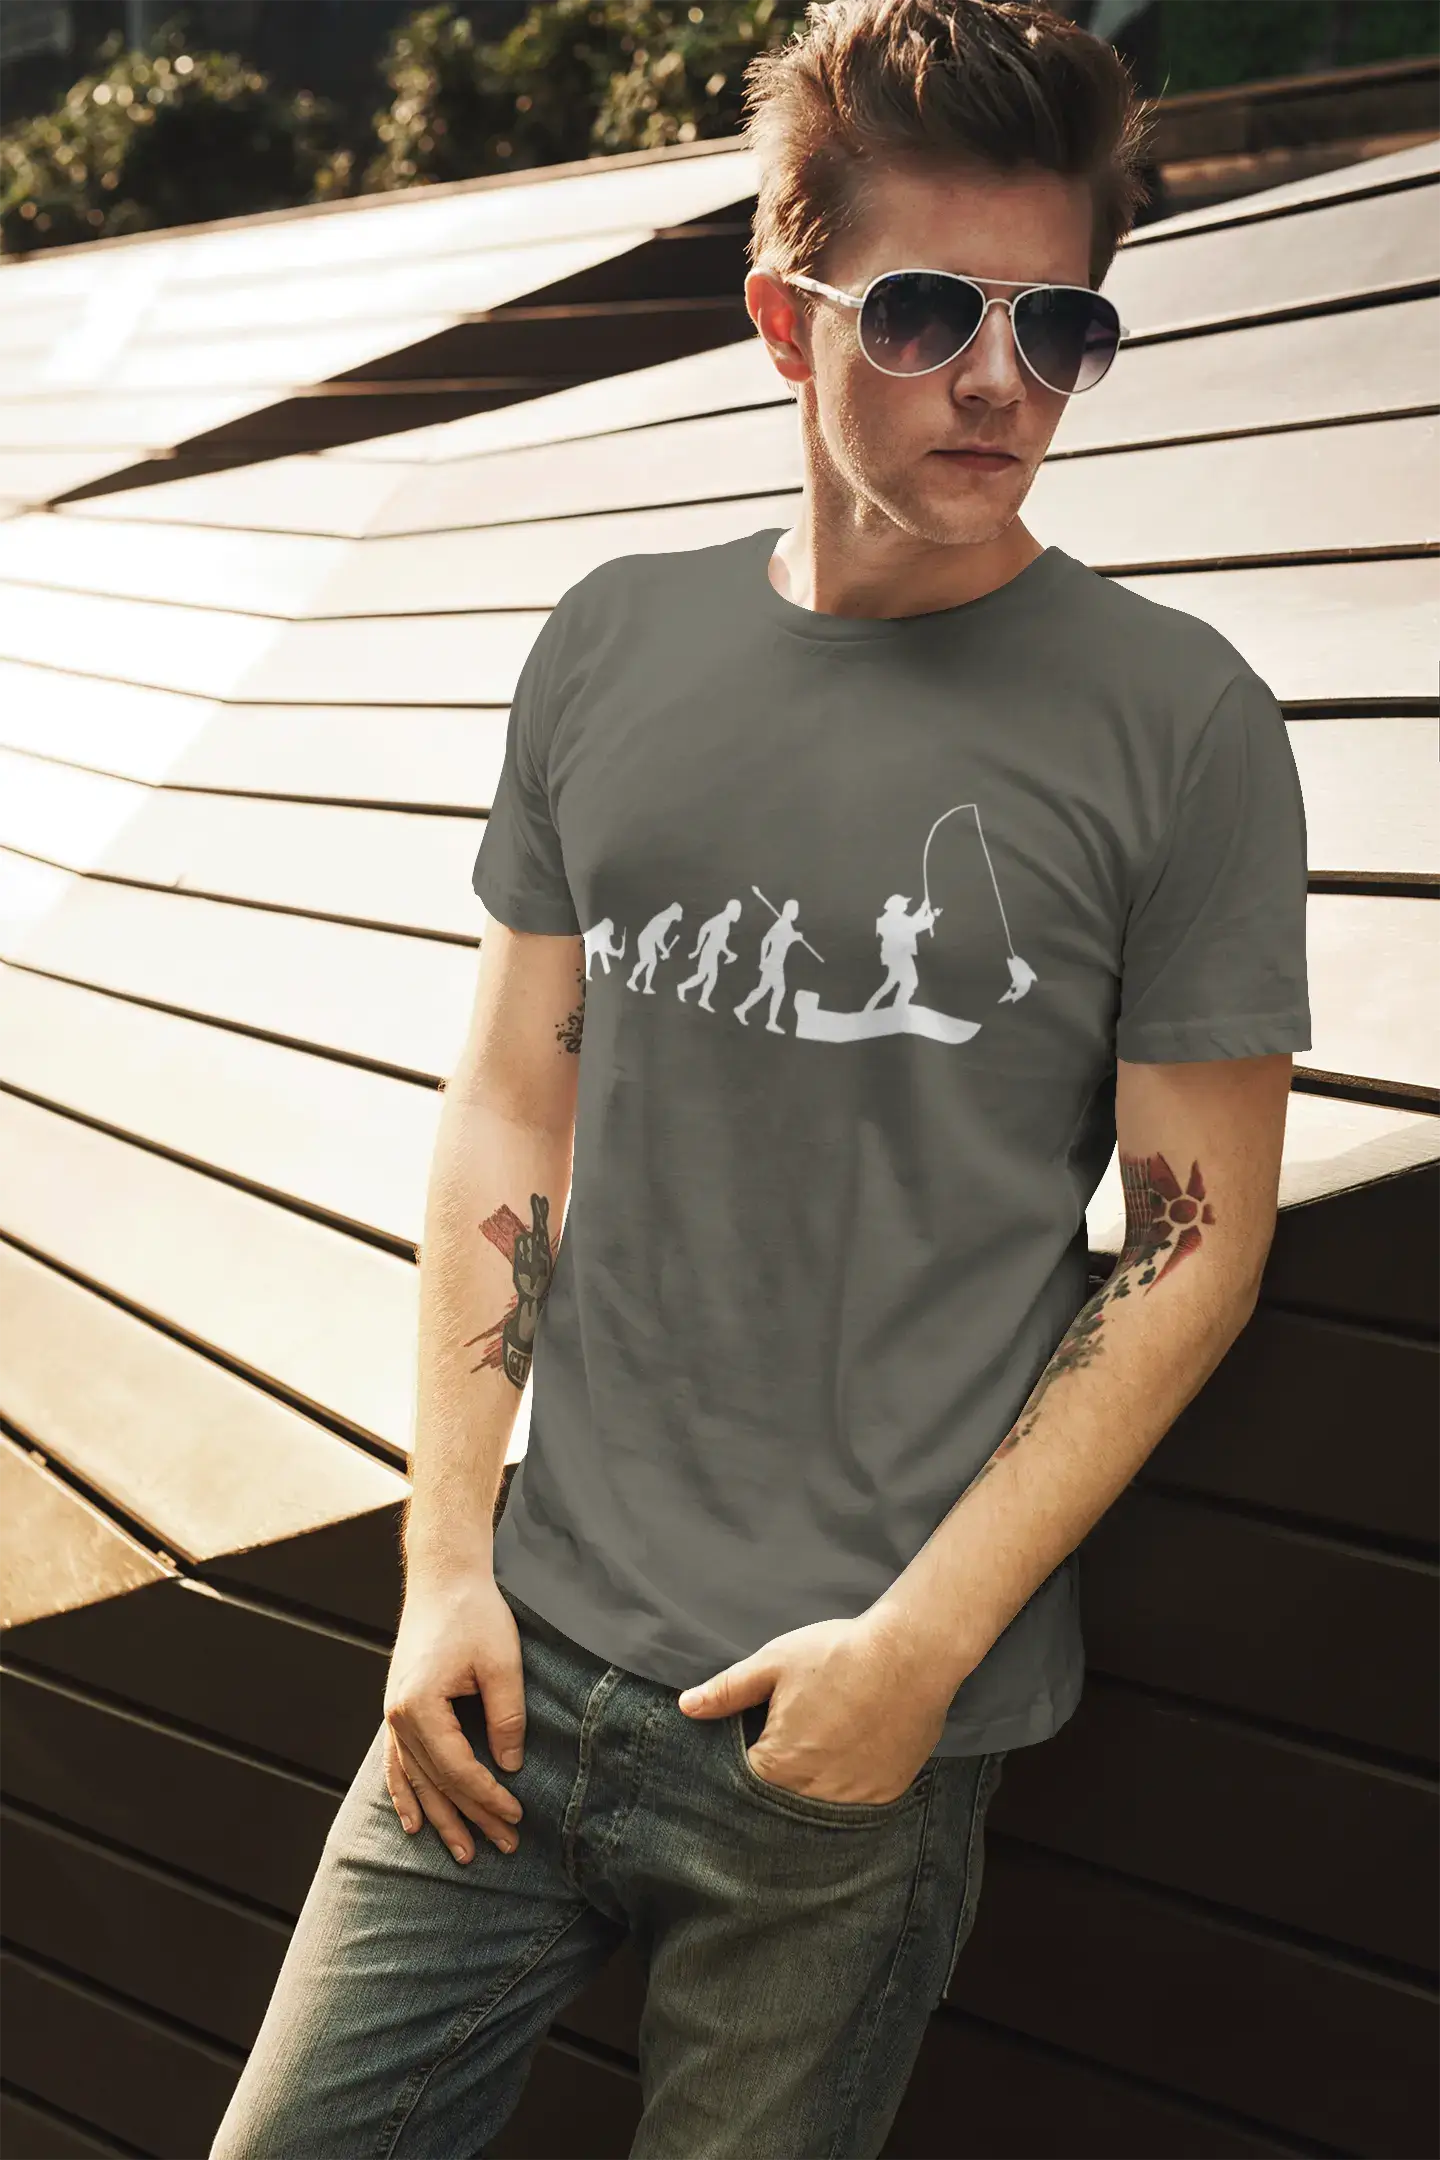 ULTRABASIC - Graphic Printed Men's Evolution of the Fishing Boat T-Shirt Deep Black